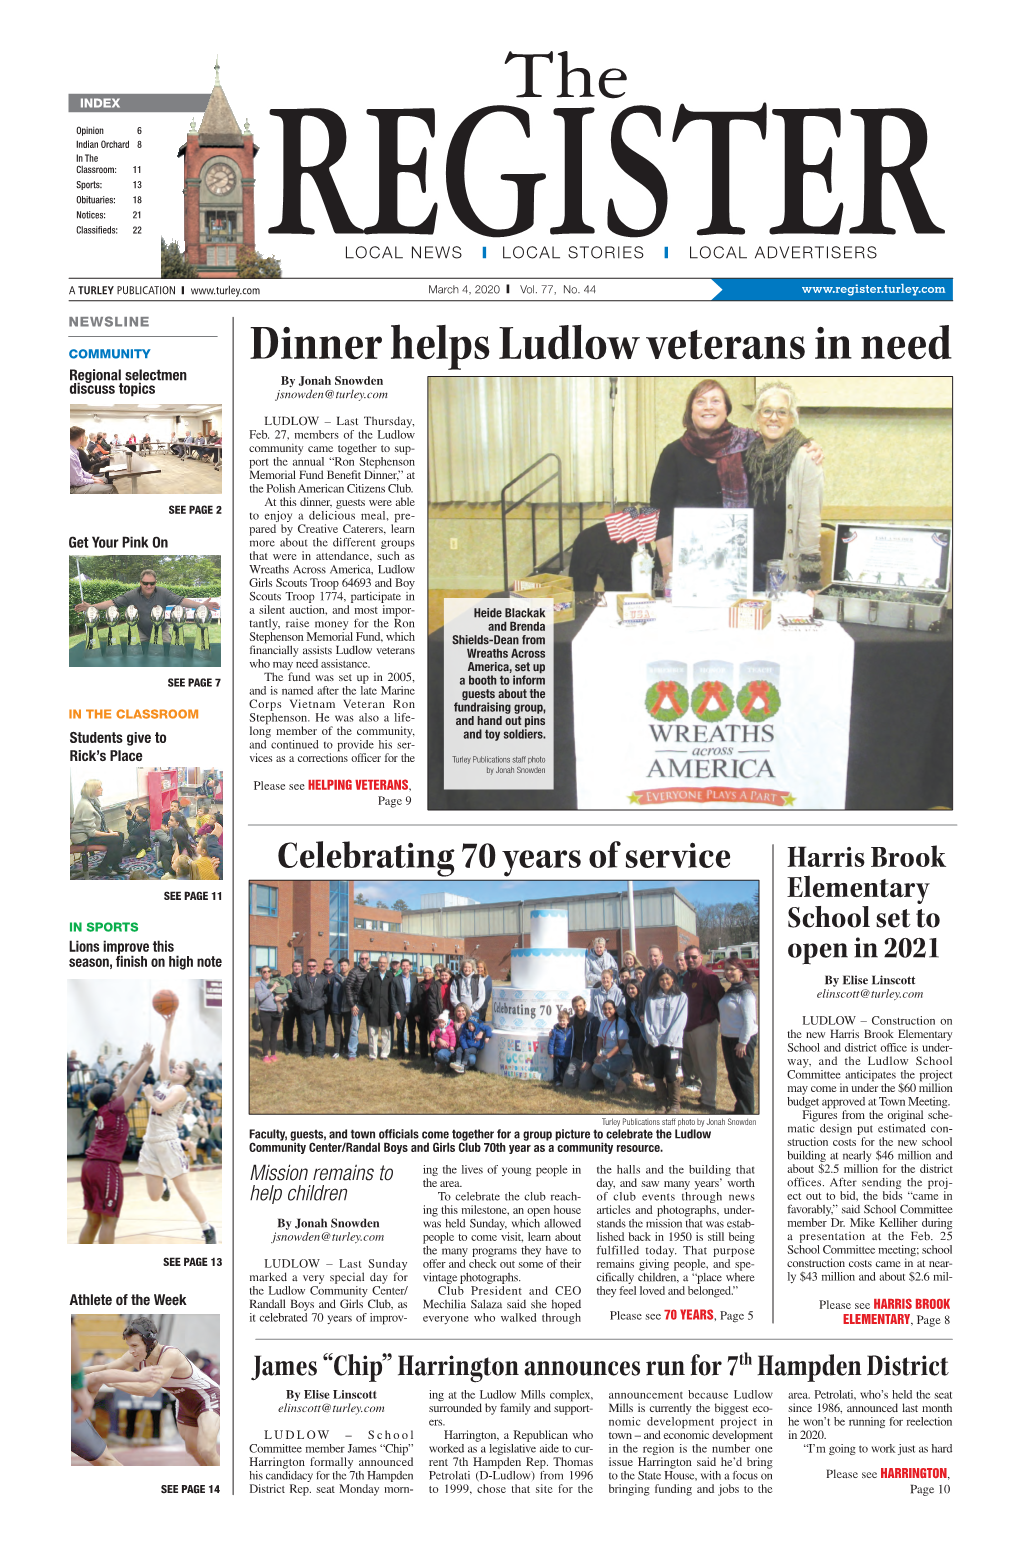 Dinner Helps Ludlow Veterans in Need Regional Selectmen by Jonah Snowden Discuss Topics Jsnowden@Turley.Com